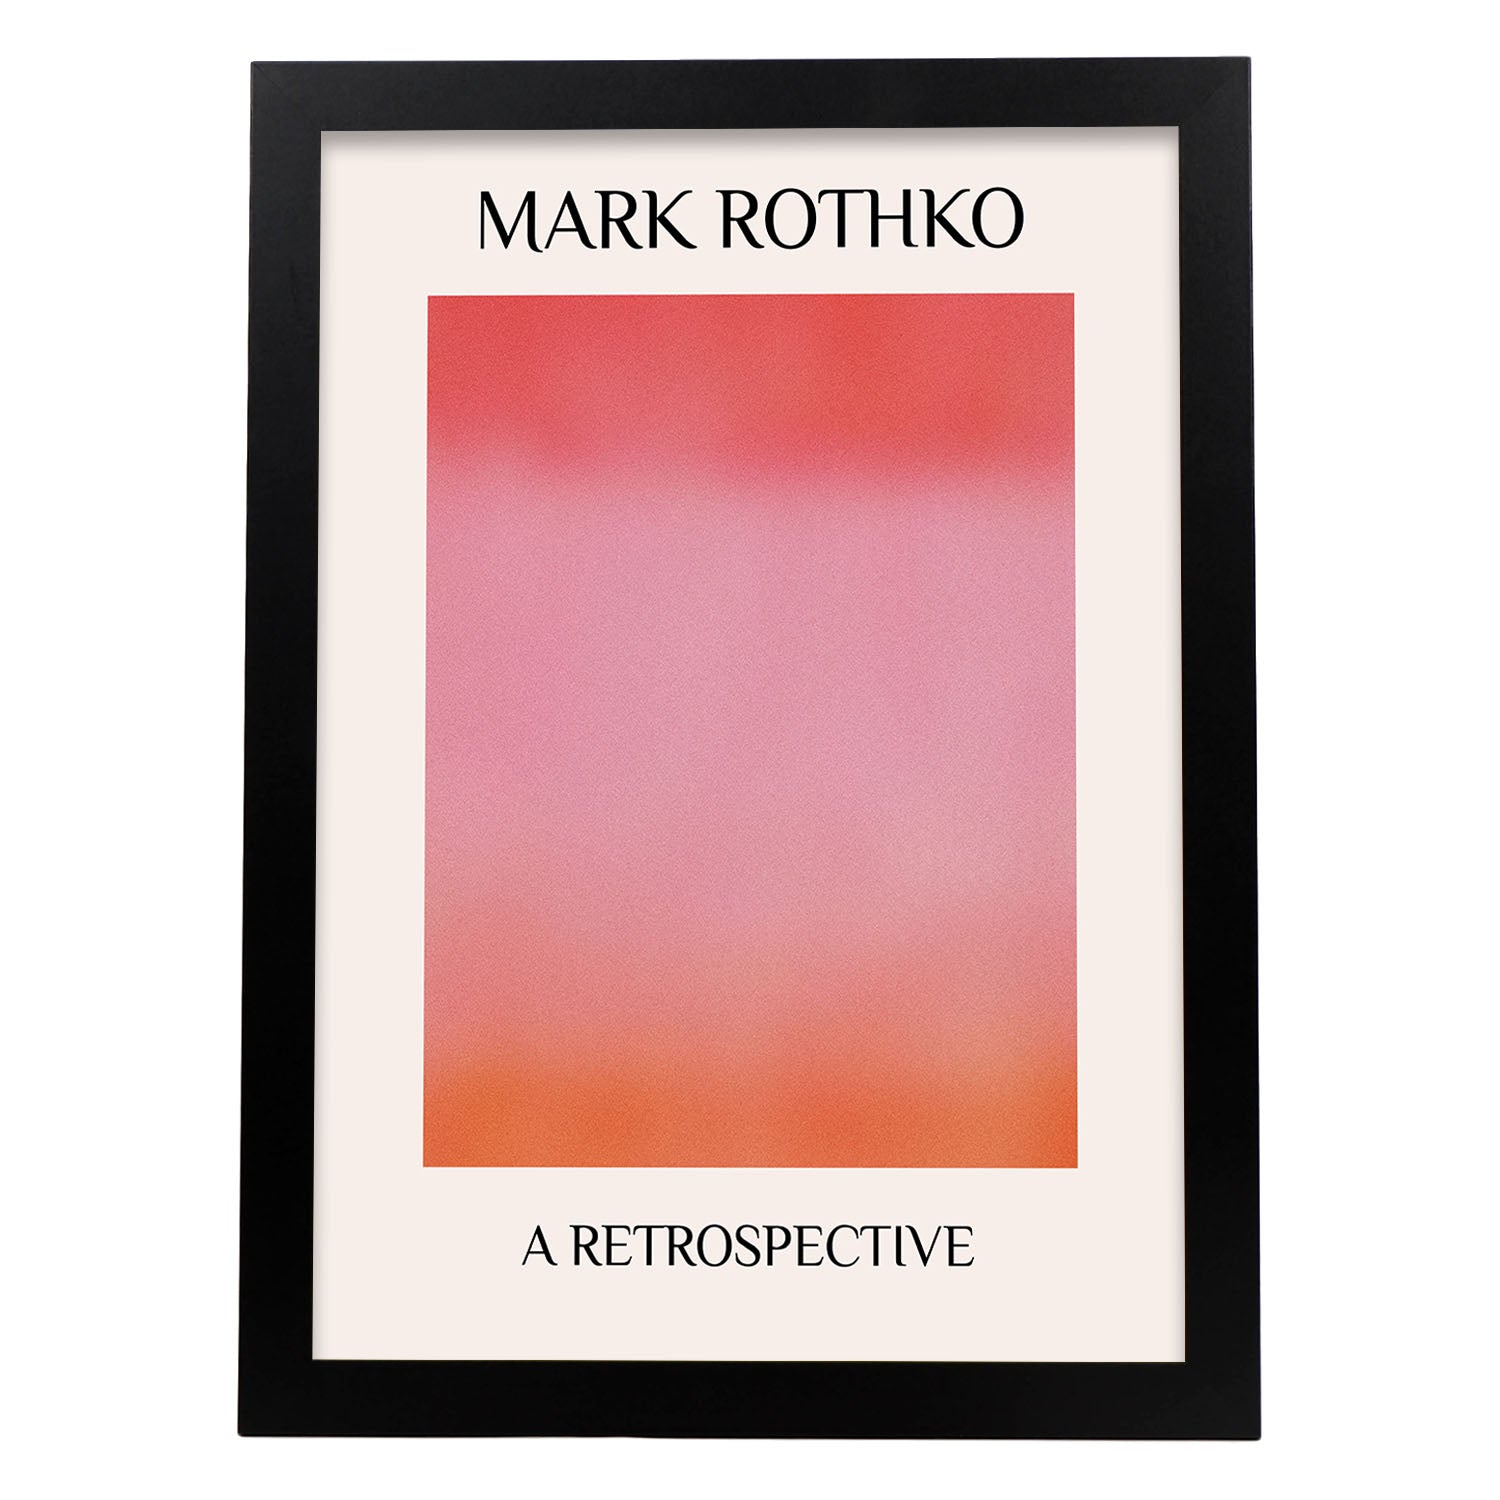 Lamina artistica decorativa con ilustración de Exposición Rothko 6 estilo expresionismo abstracto-Artwork-Nacnic-A4-Marco Negro-Nacnic Estudio SL